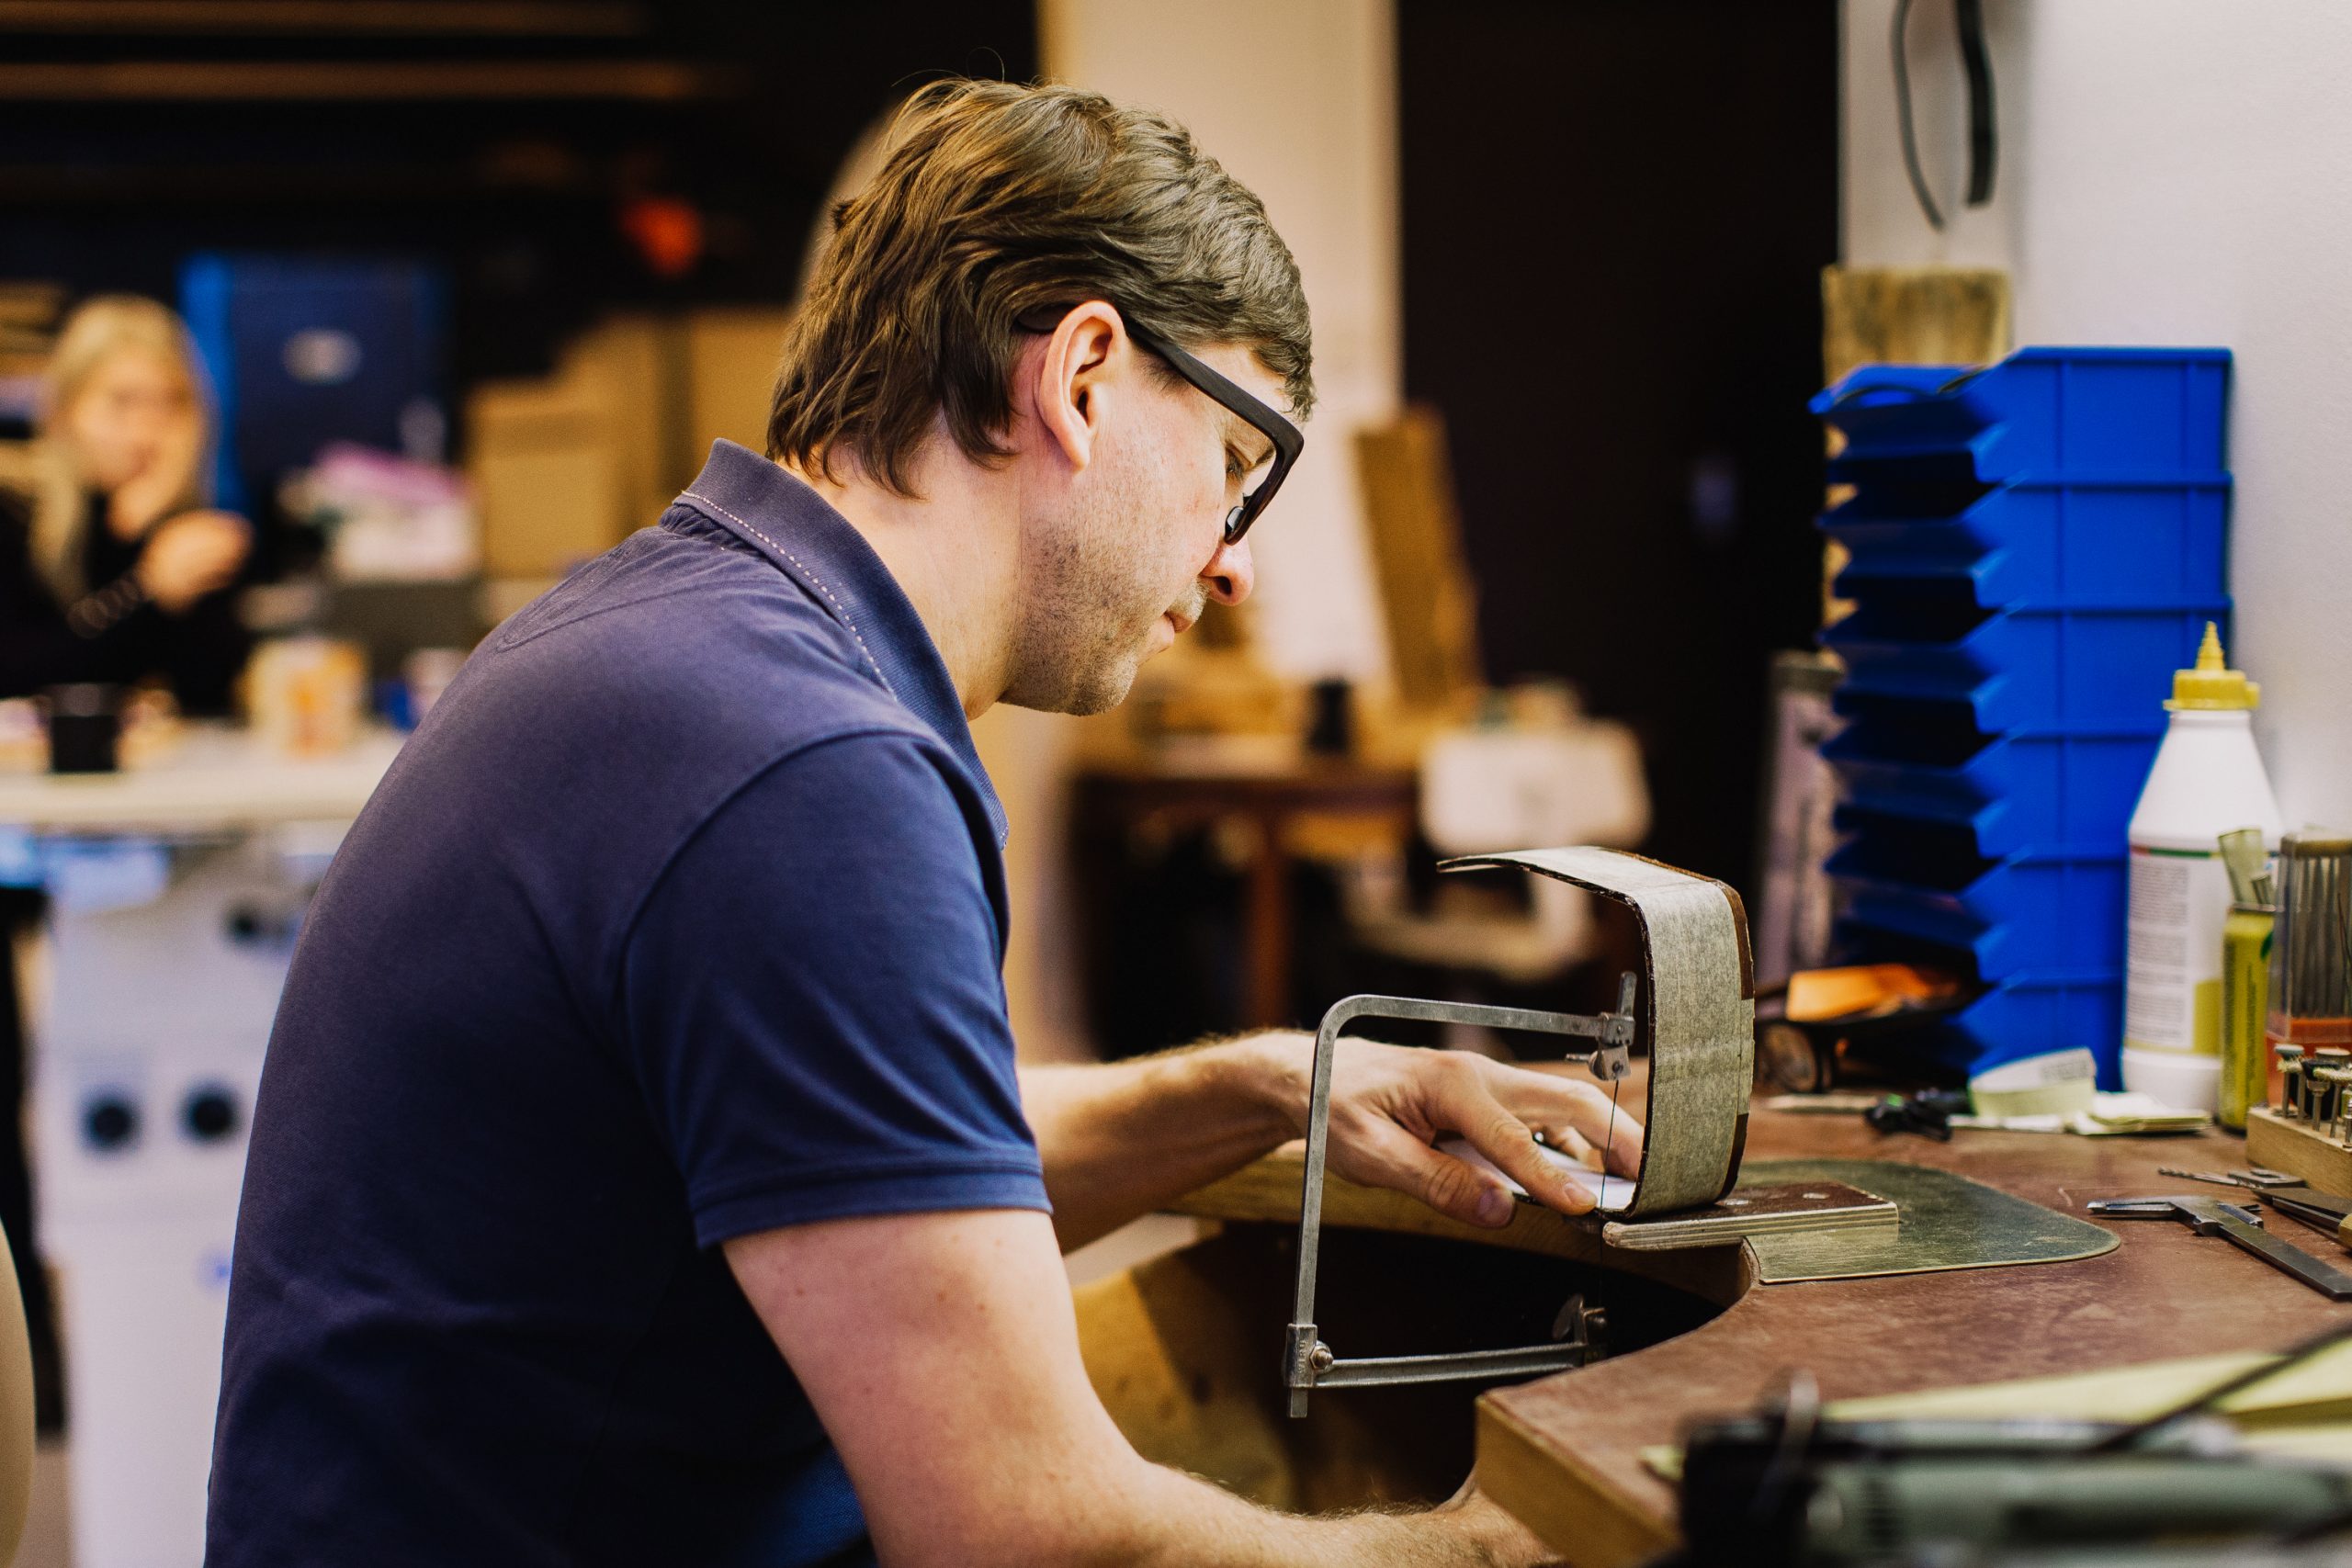 Skilled craft worker manufacturing glasses.